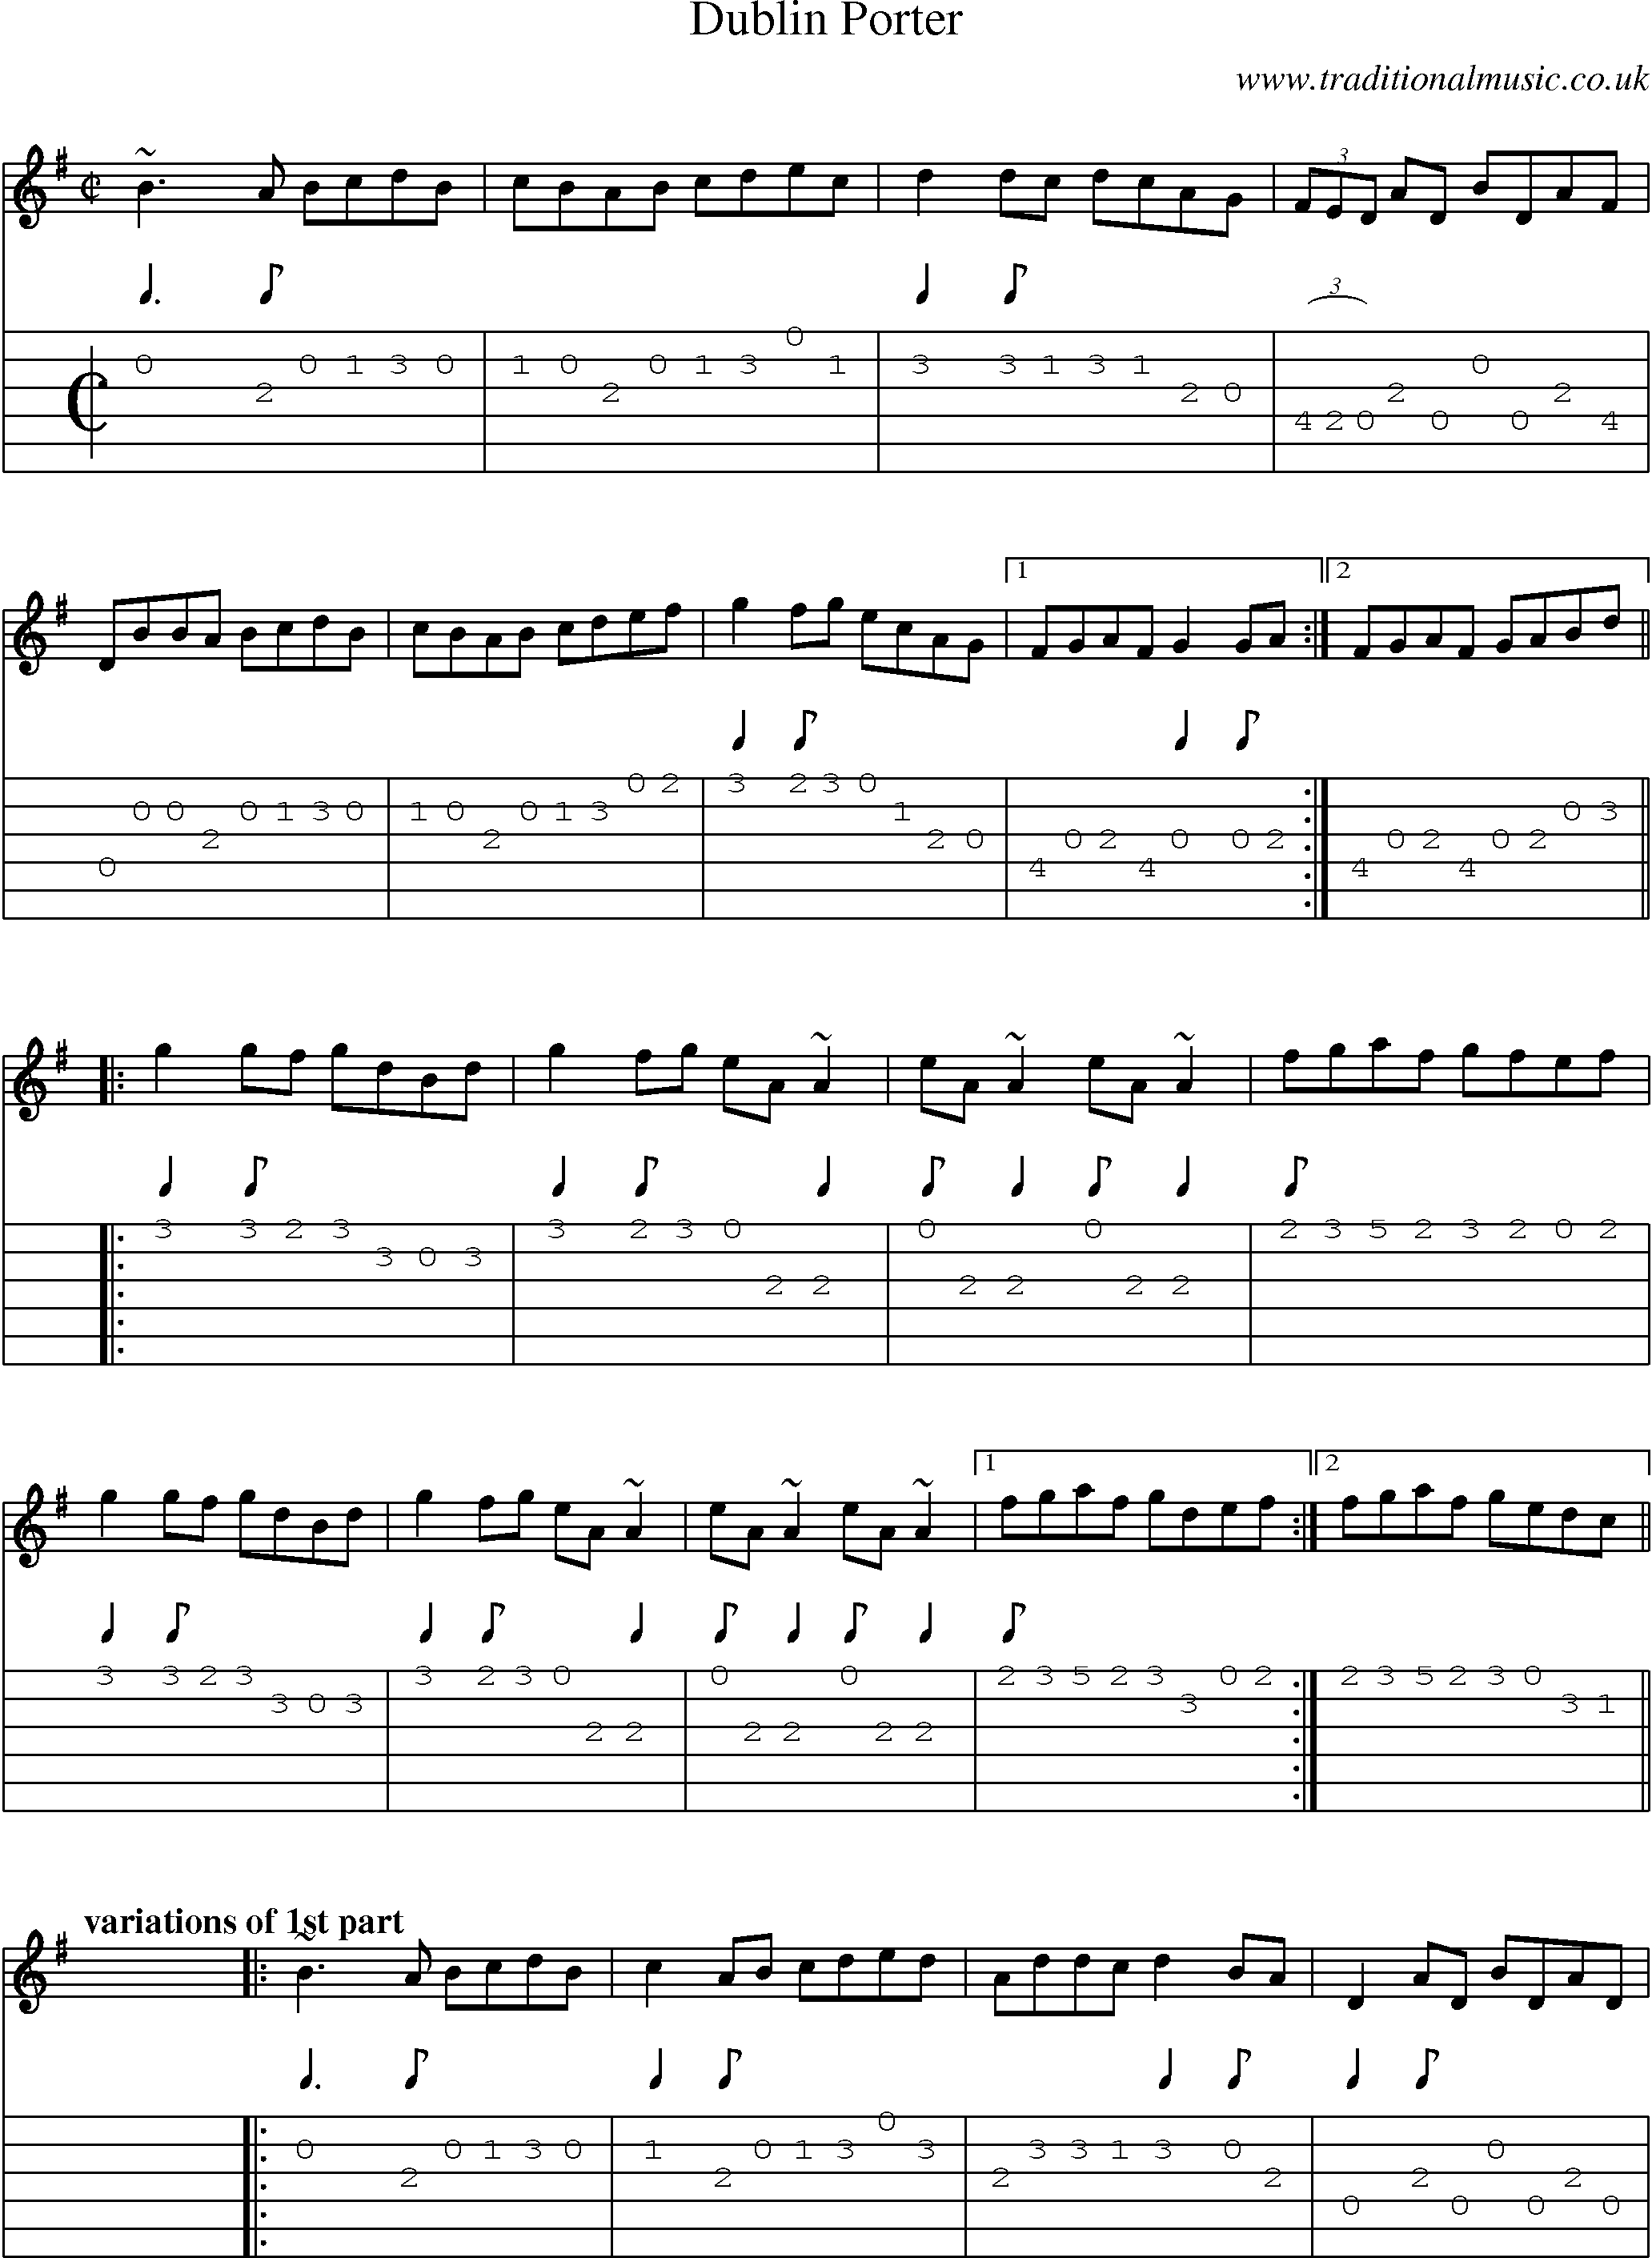 Music Score and Guitar Tabs for Dublin Porter